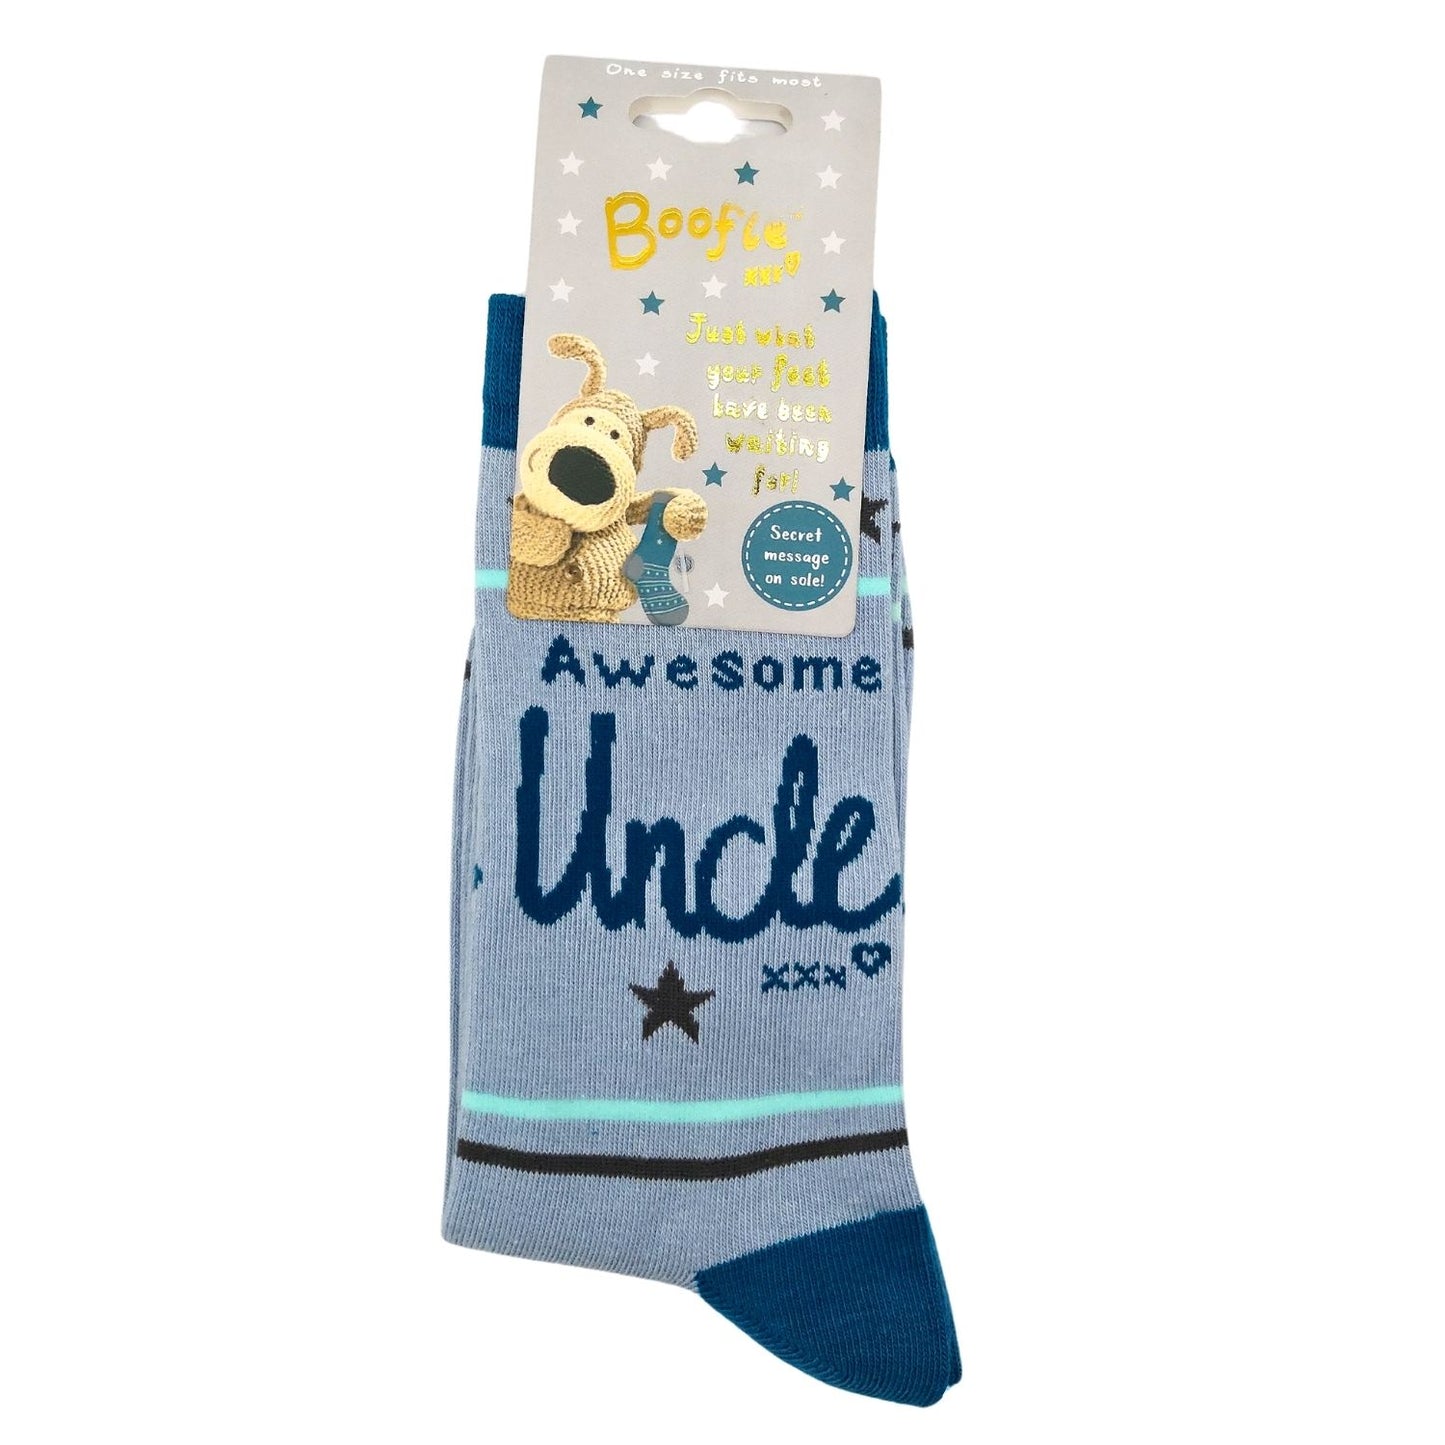 Boofle Awesome Uncle Starstruck Pup-Arazzi Socks Gift Idea